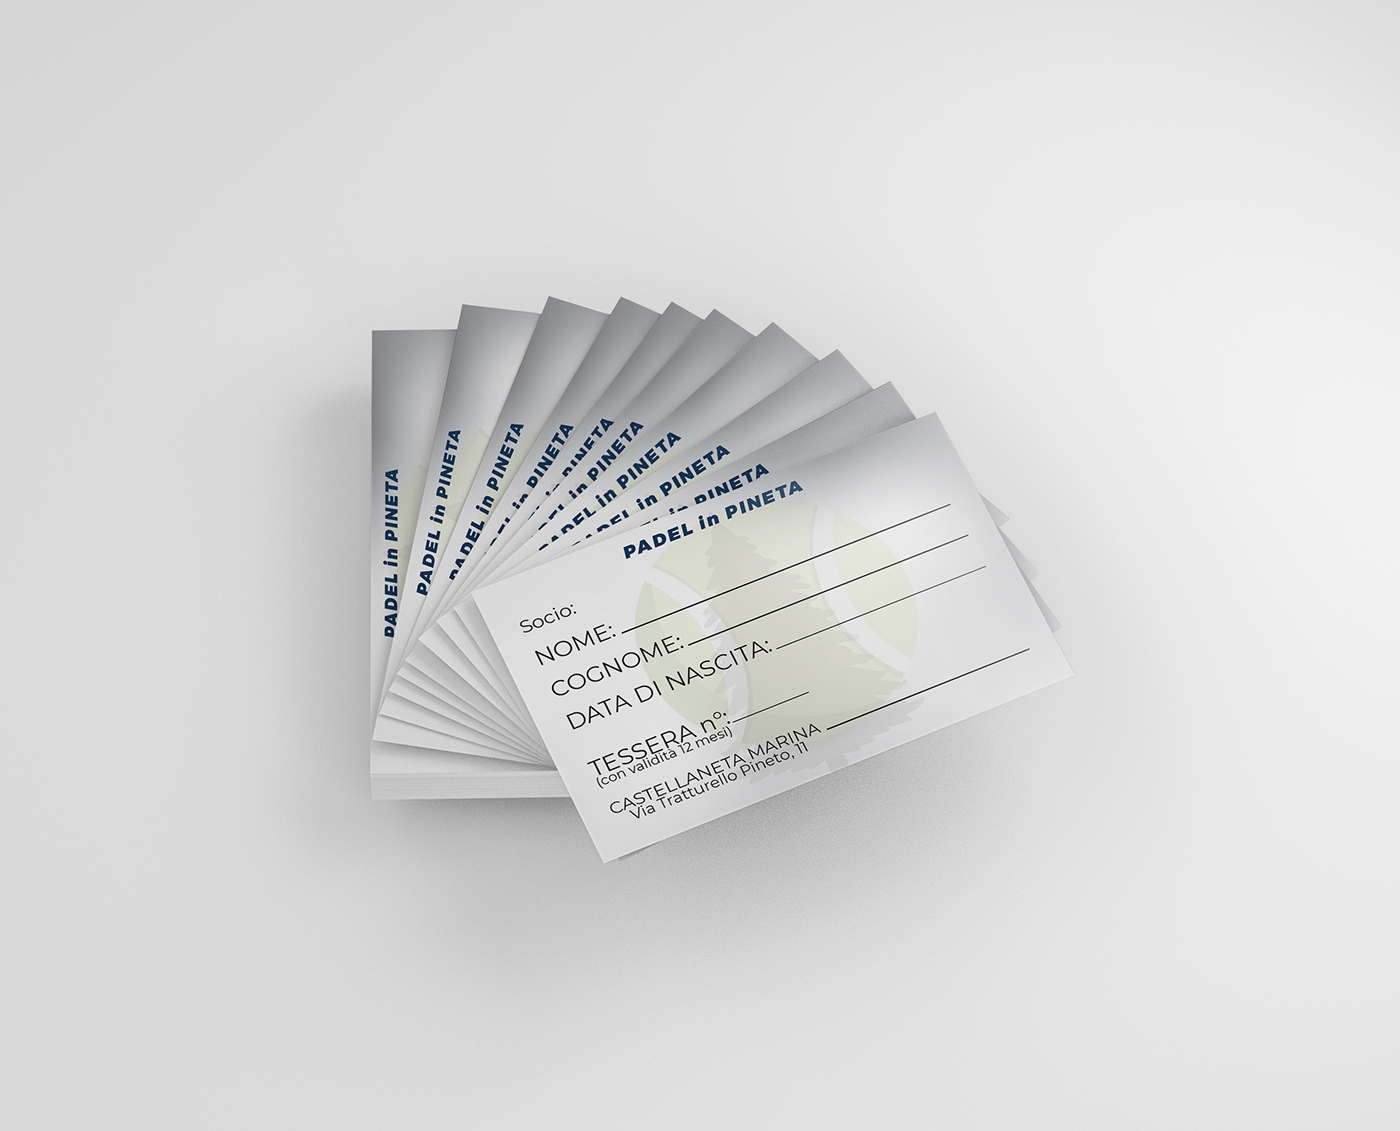 business card FIDELITYCARD Padel